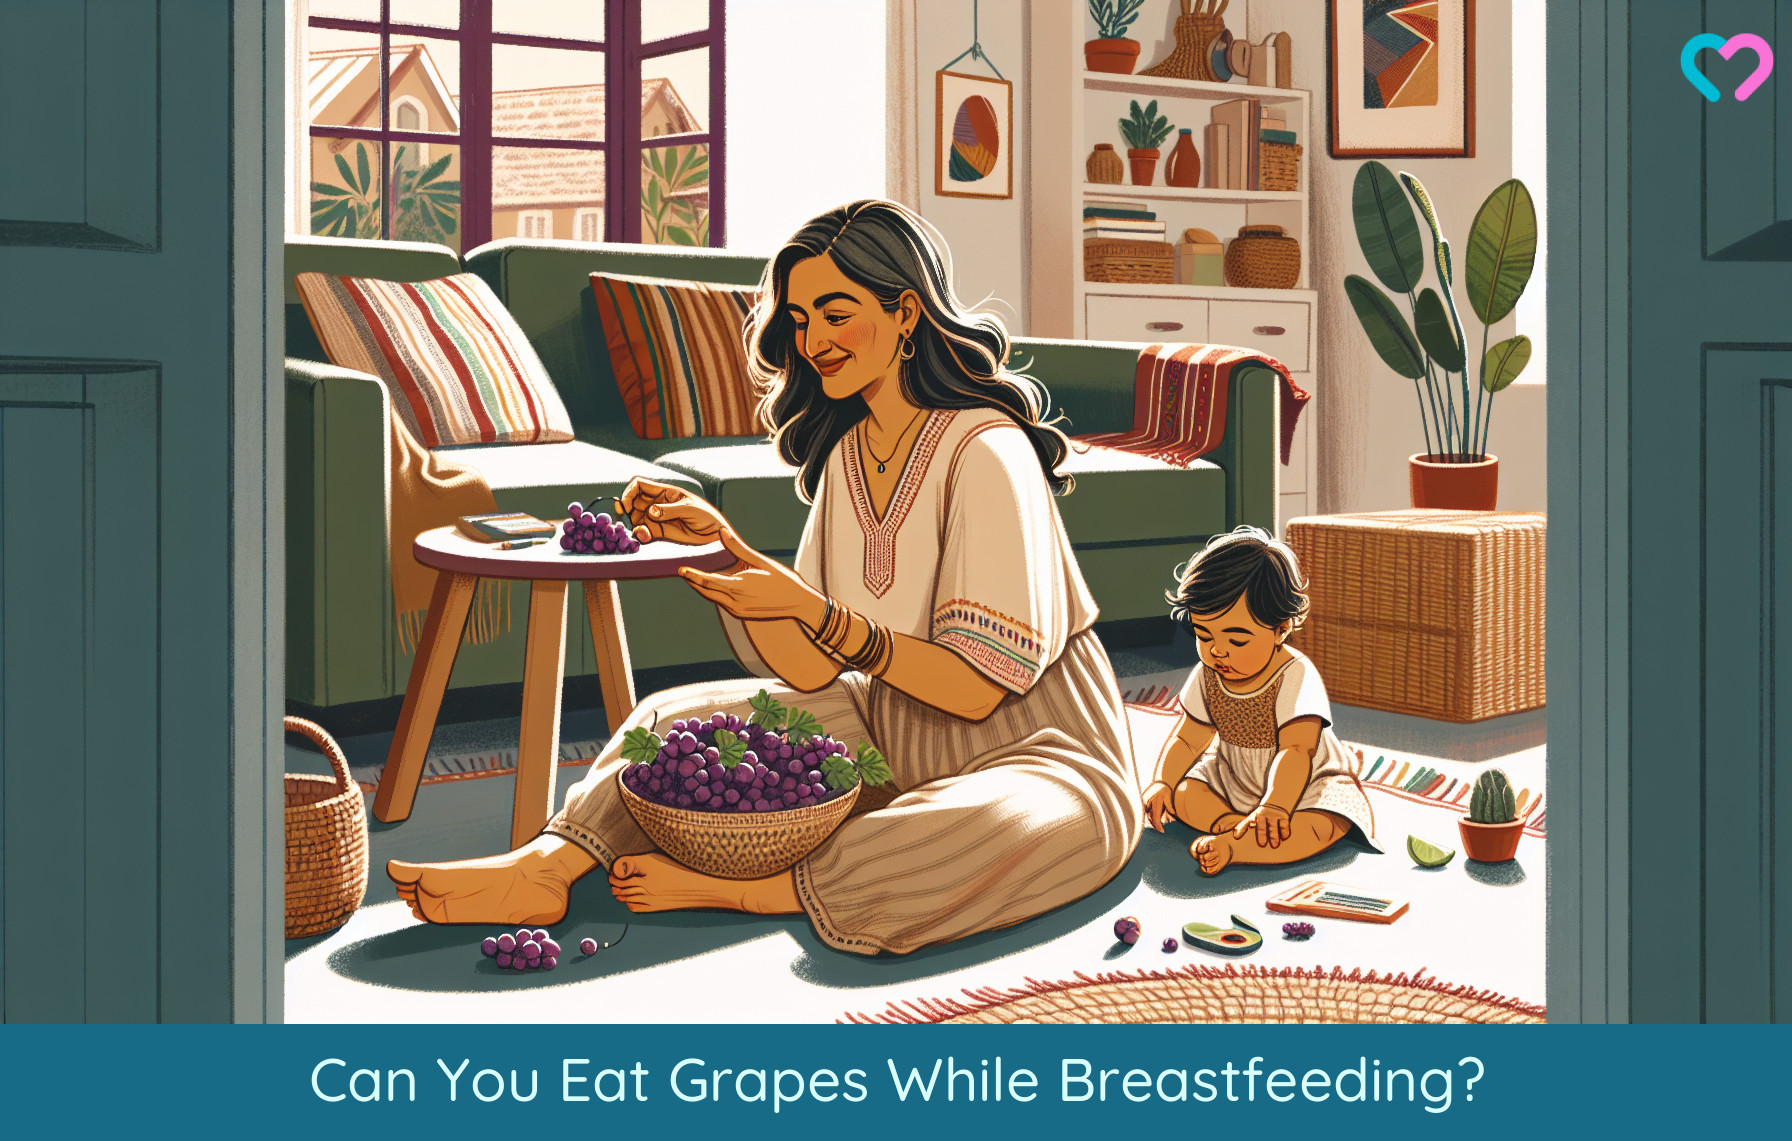 grapes during breastfeeding_illustration